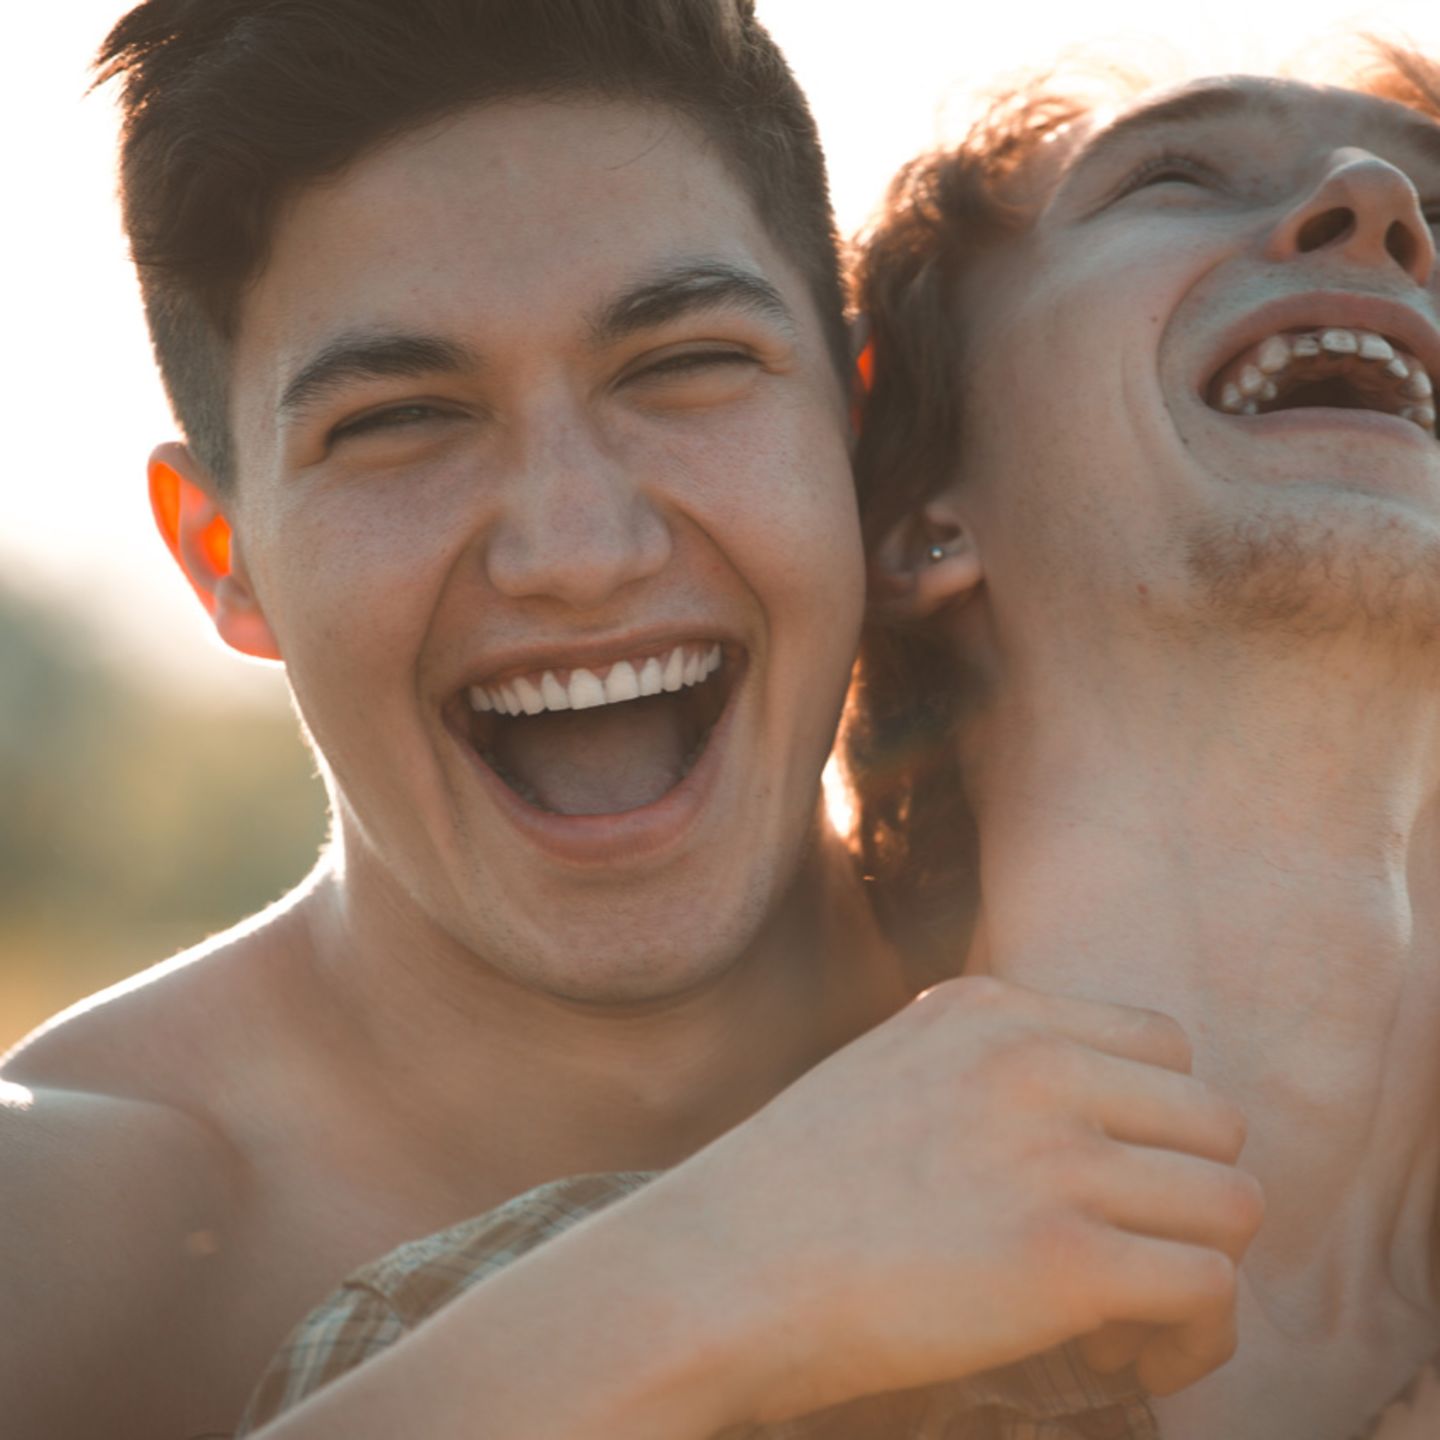 Fotos schwule männer nackt Kostenloses reife